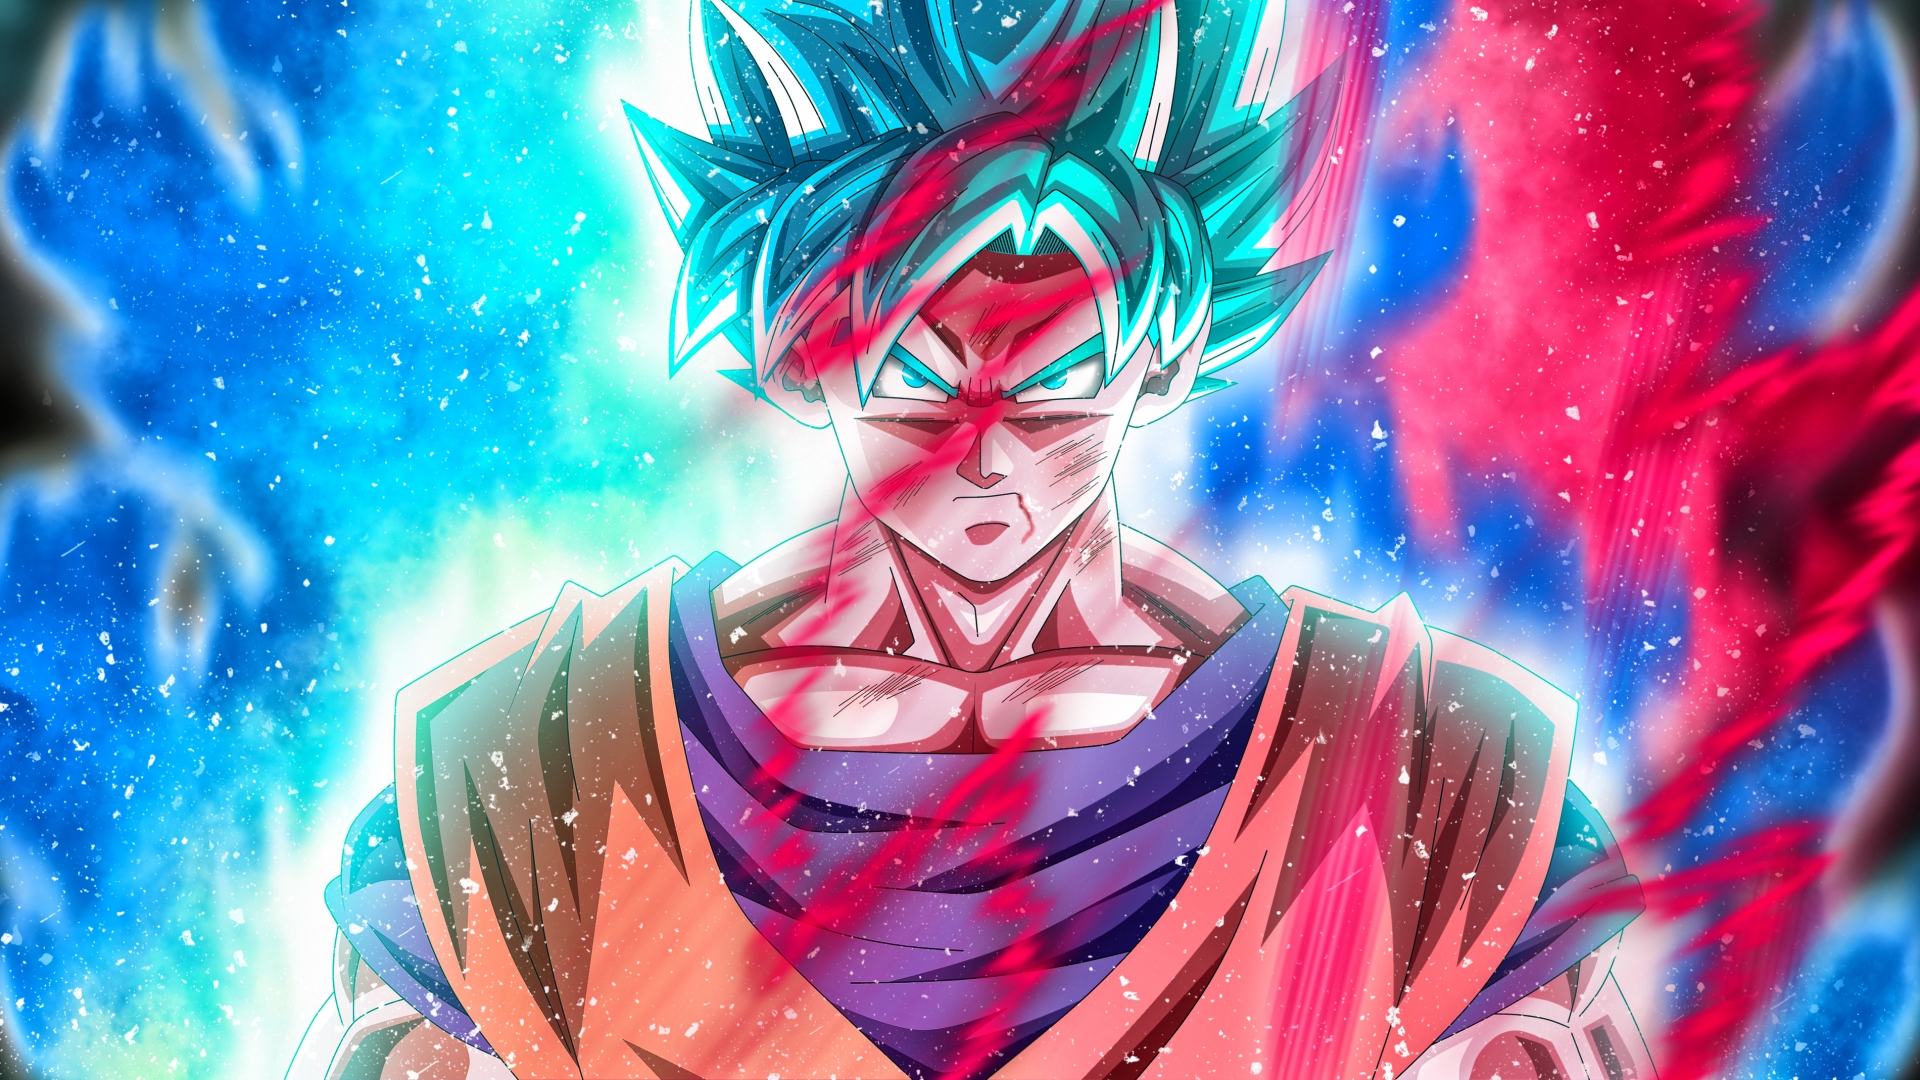 Goku Super Saiyan Blue from Dragon Ball Super Anime Wallpaper ID:4547